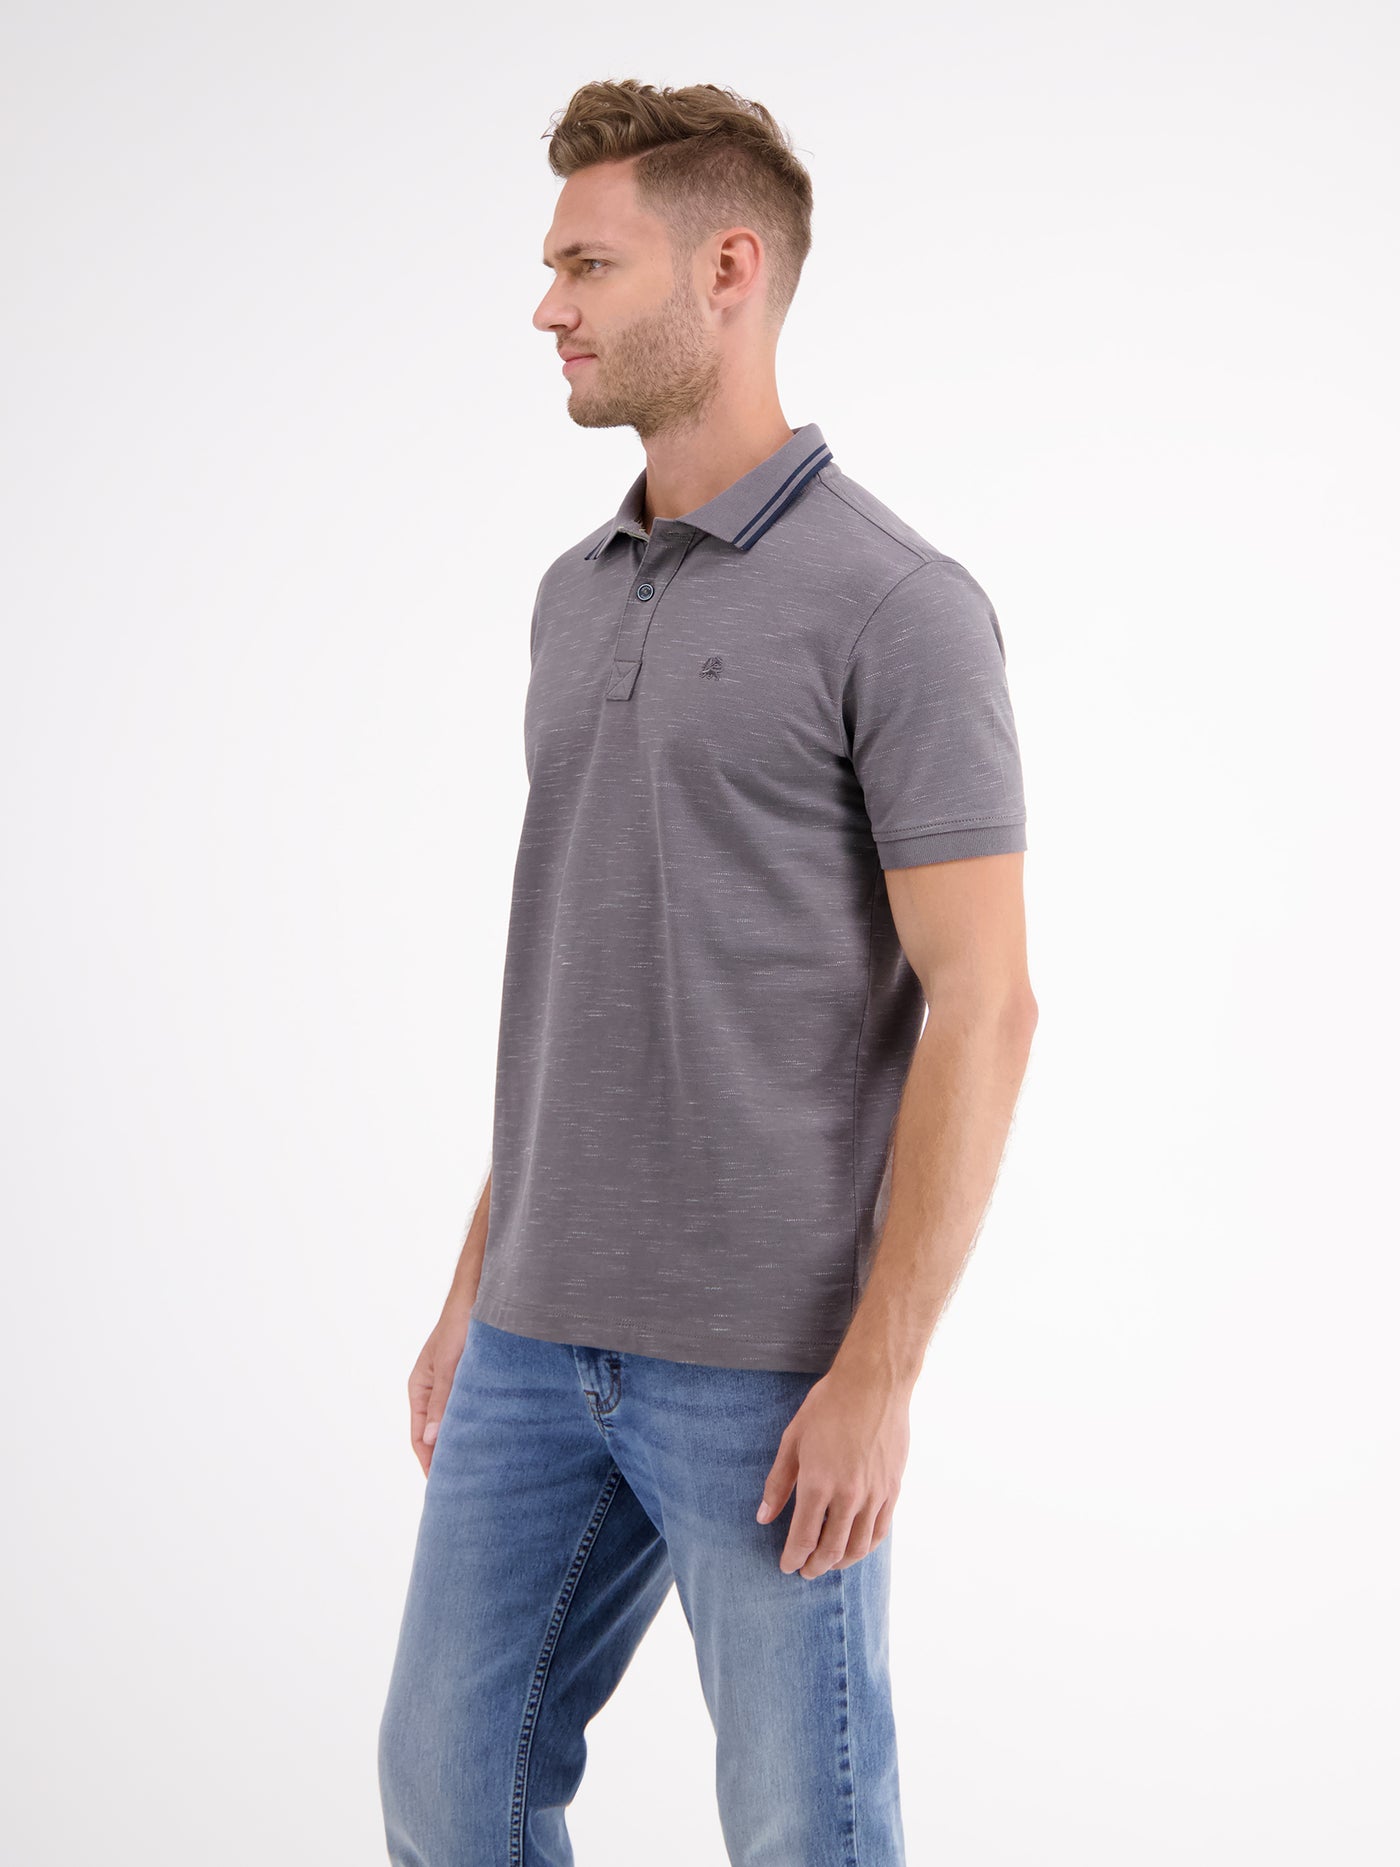 Polo shirt in two-tone piqué